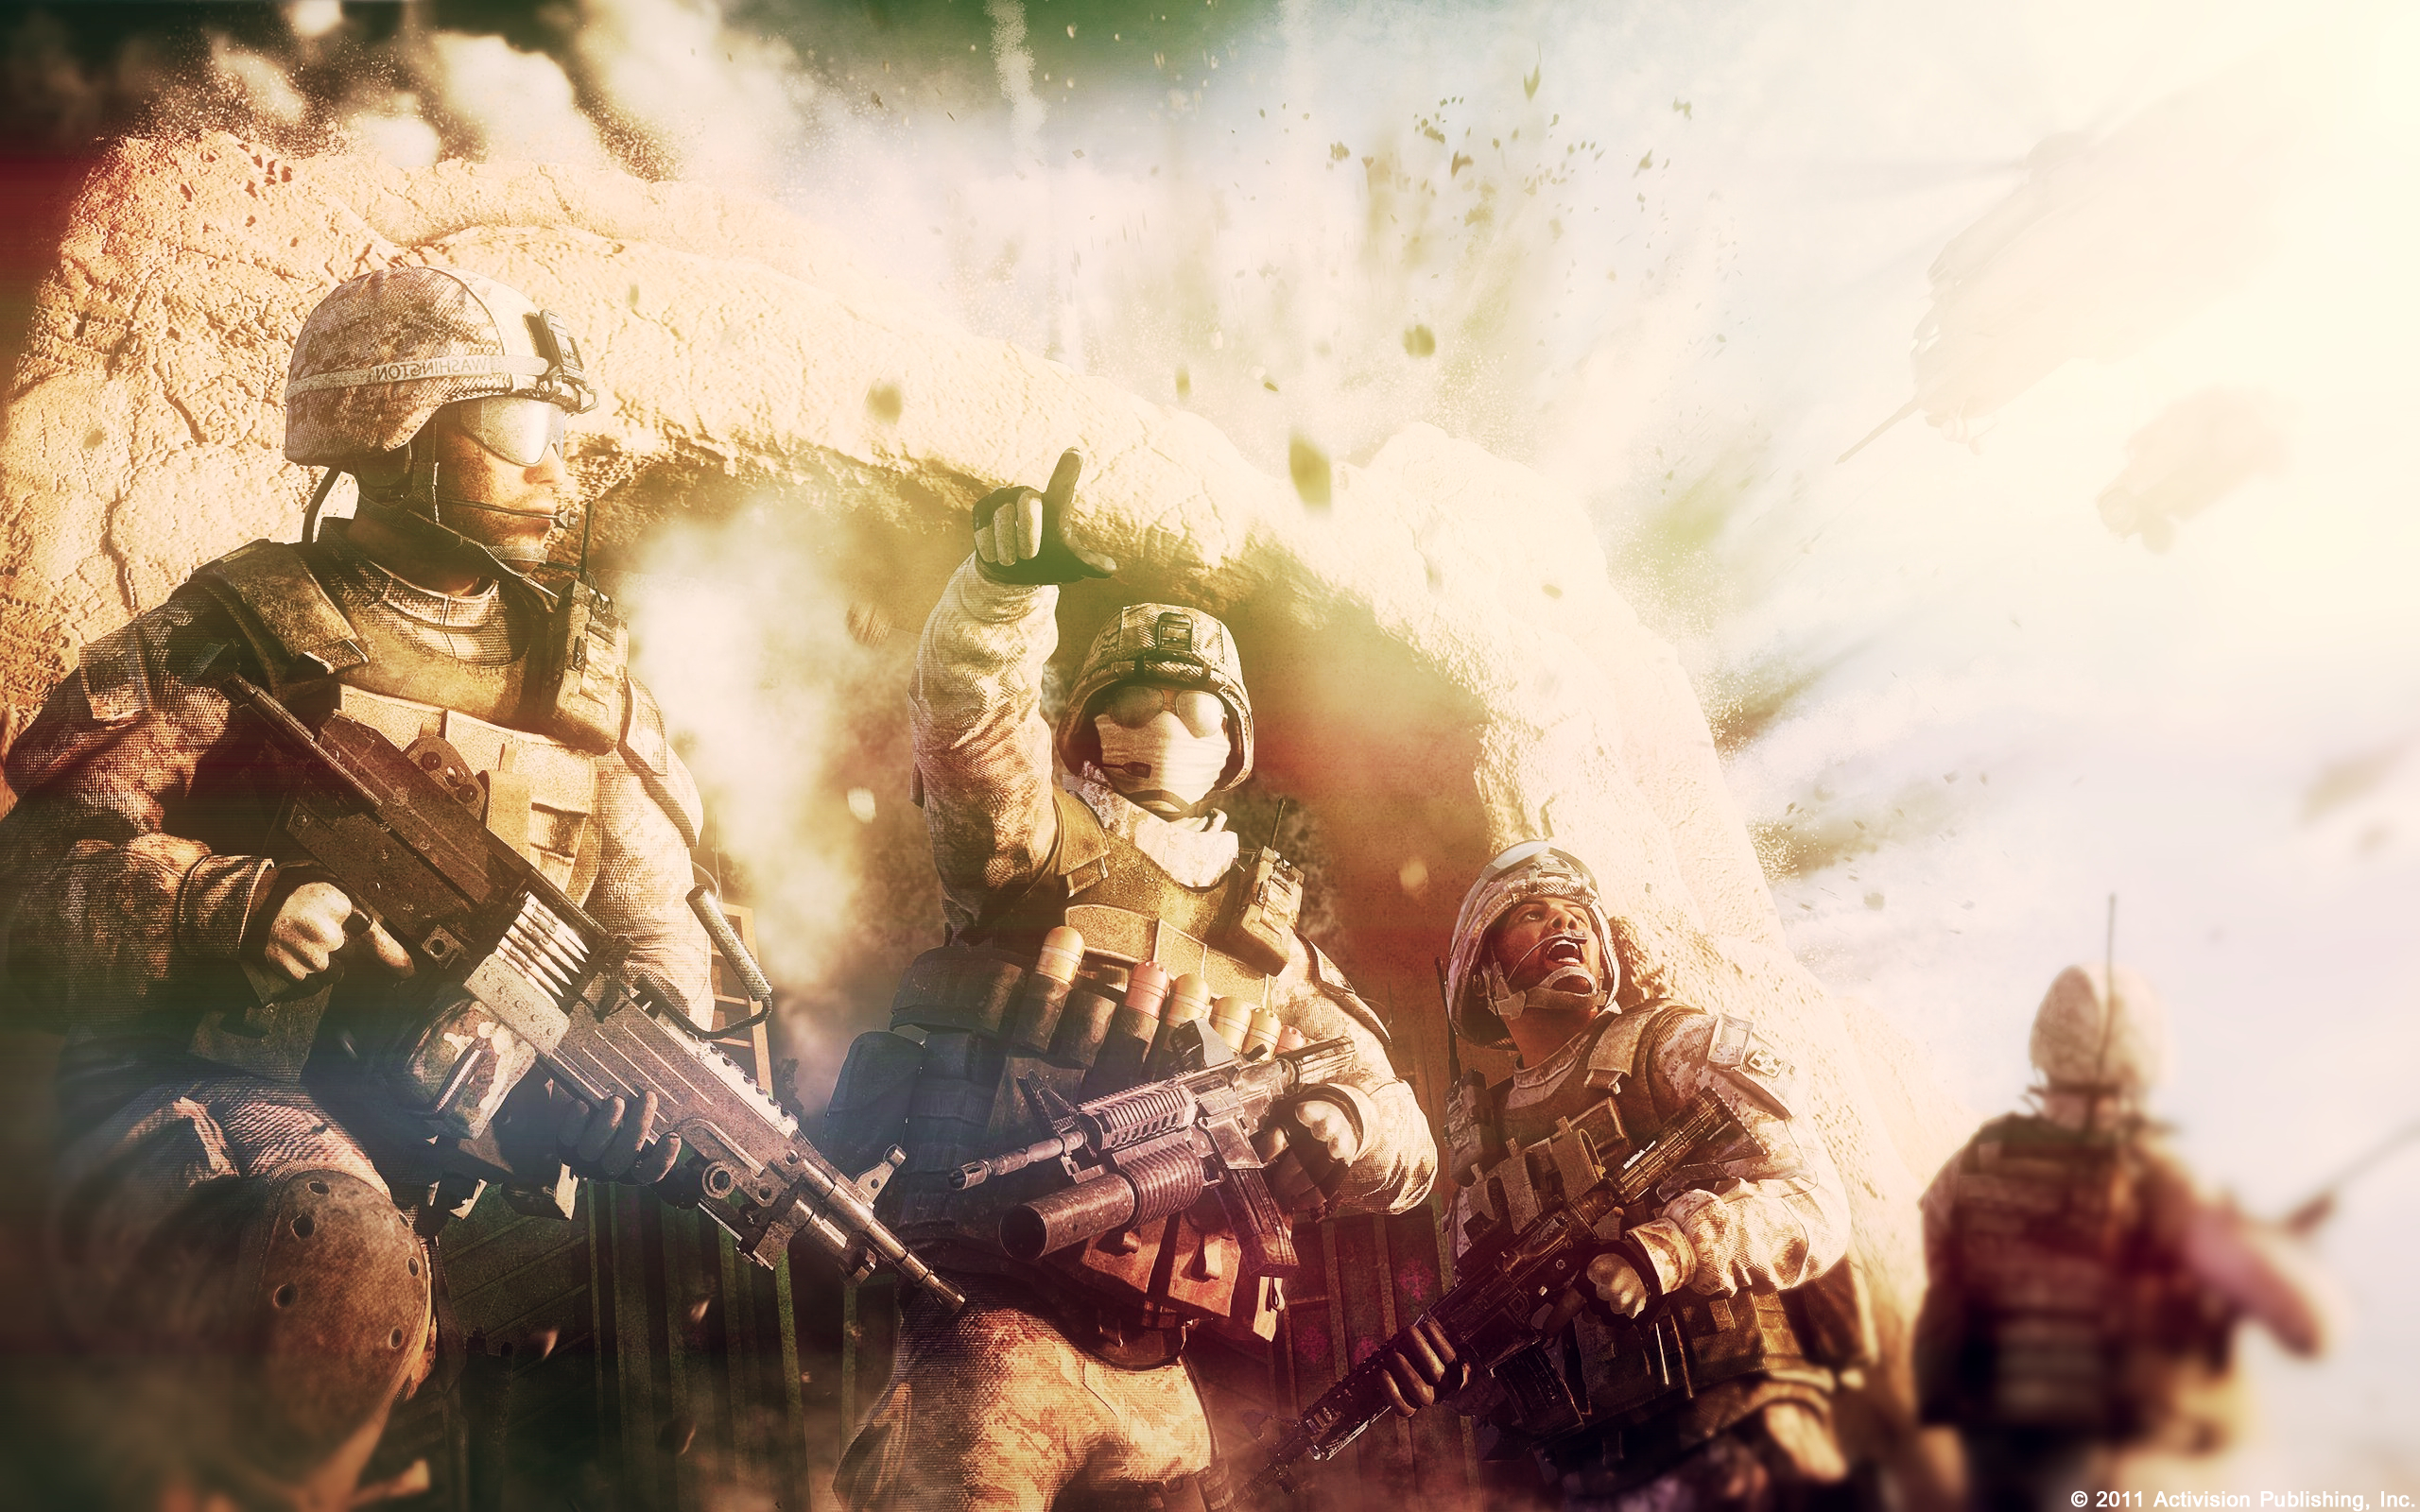 Call of Duty: Modern Warfare 3 Wallpapers